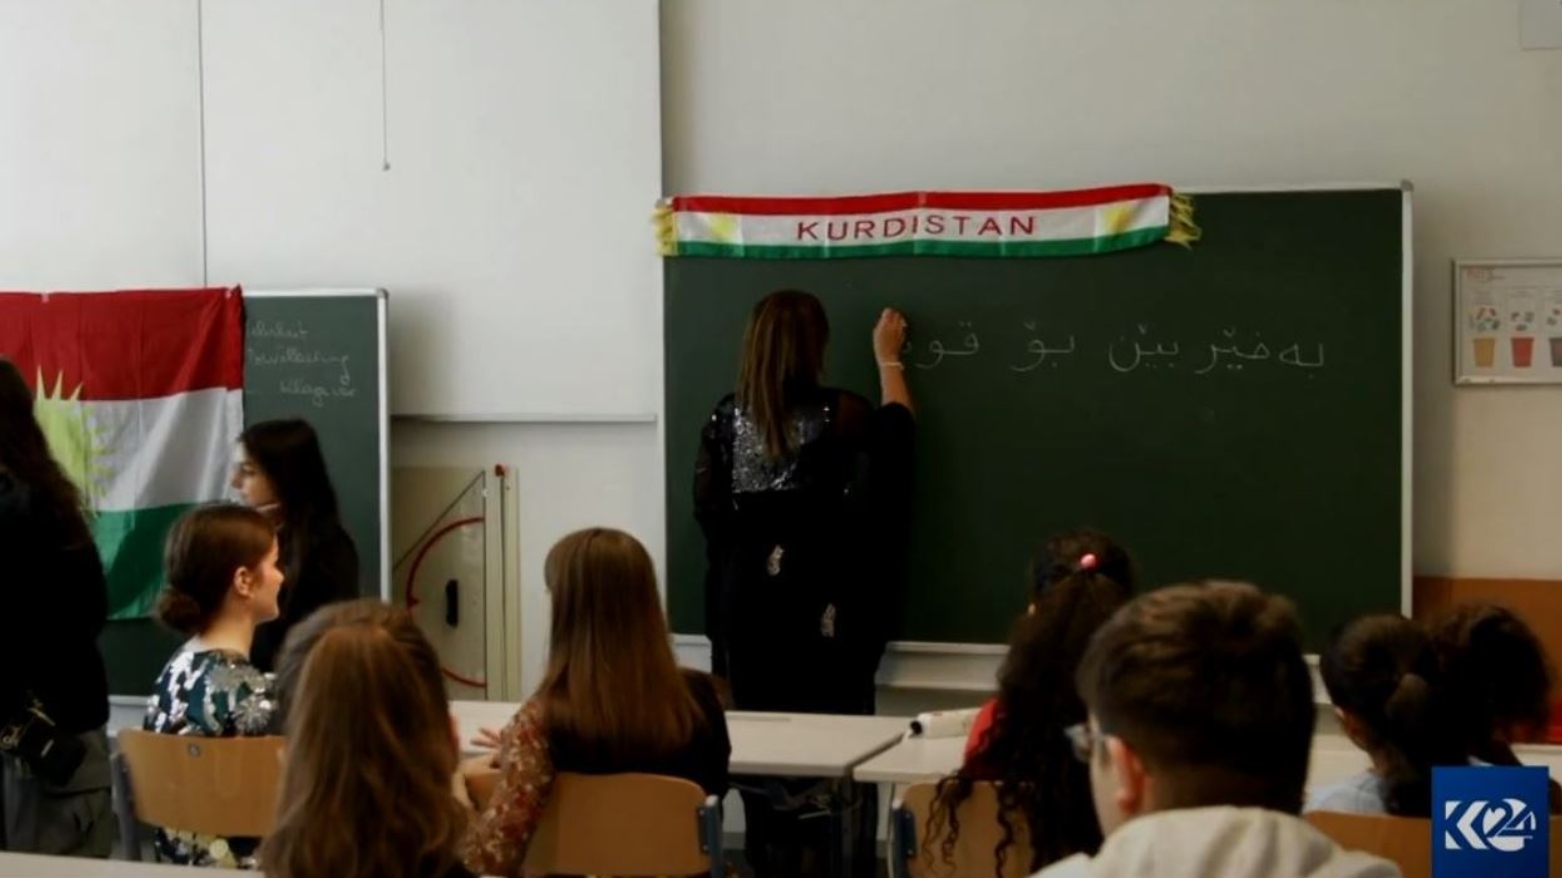 A teacher writes on a blackboard in the new Kurdish school in Vienna. (Photo: Kurdistan 24)